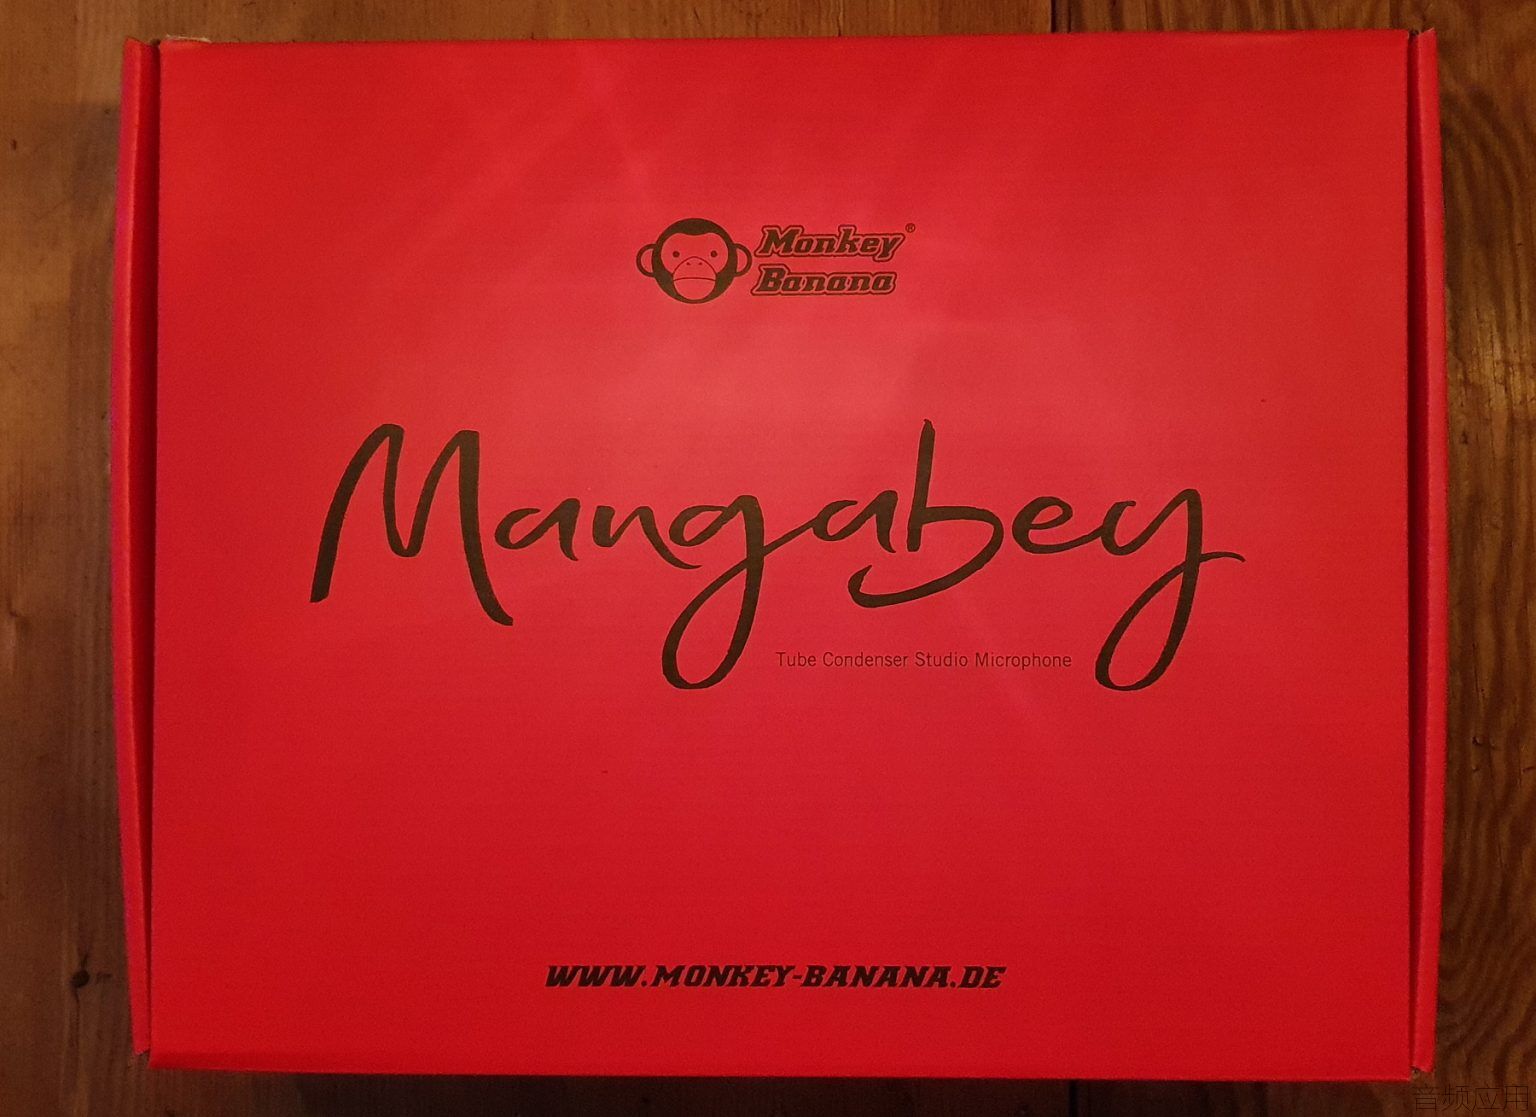 monkey-banana-mangabey-box.jpg